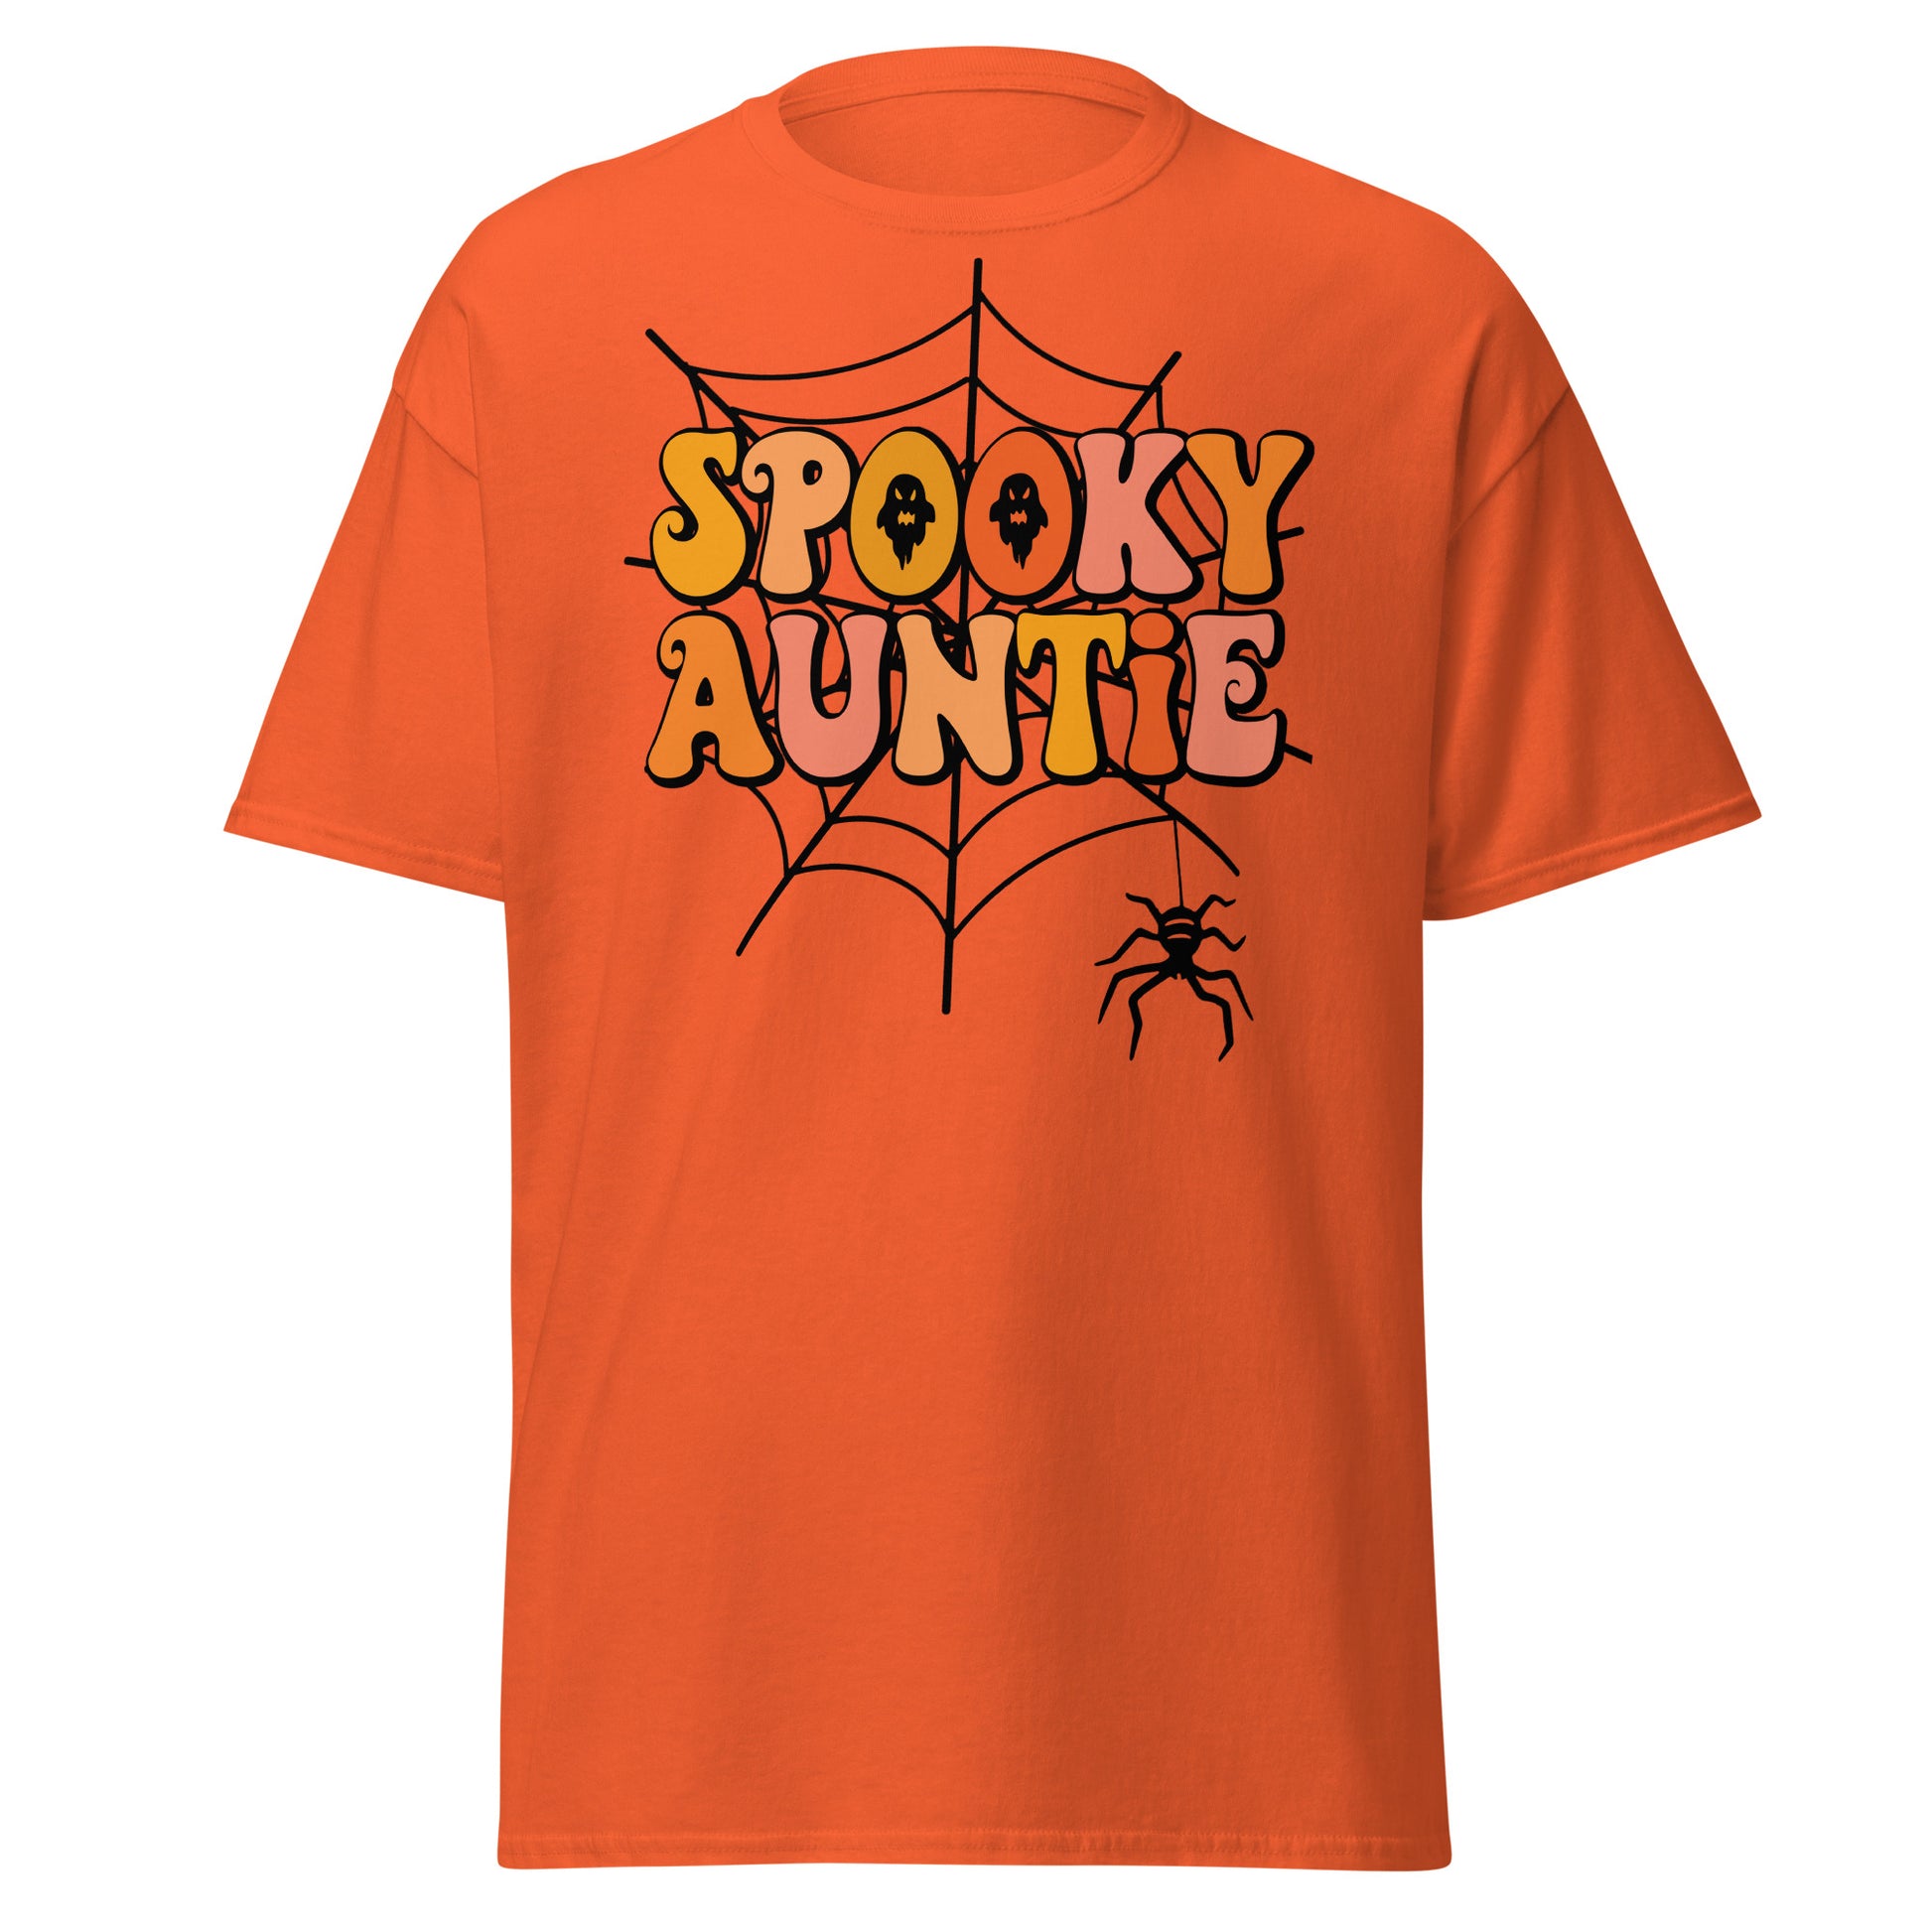 Spooky Auntie' Shirt: Stylish Halloween Fun 🎃 T-Shirt